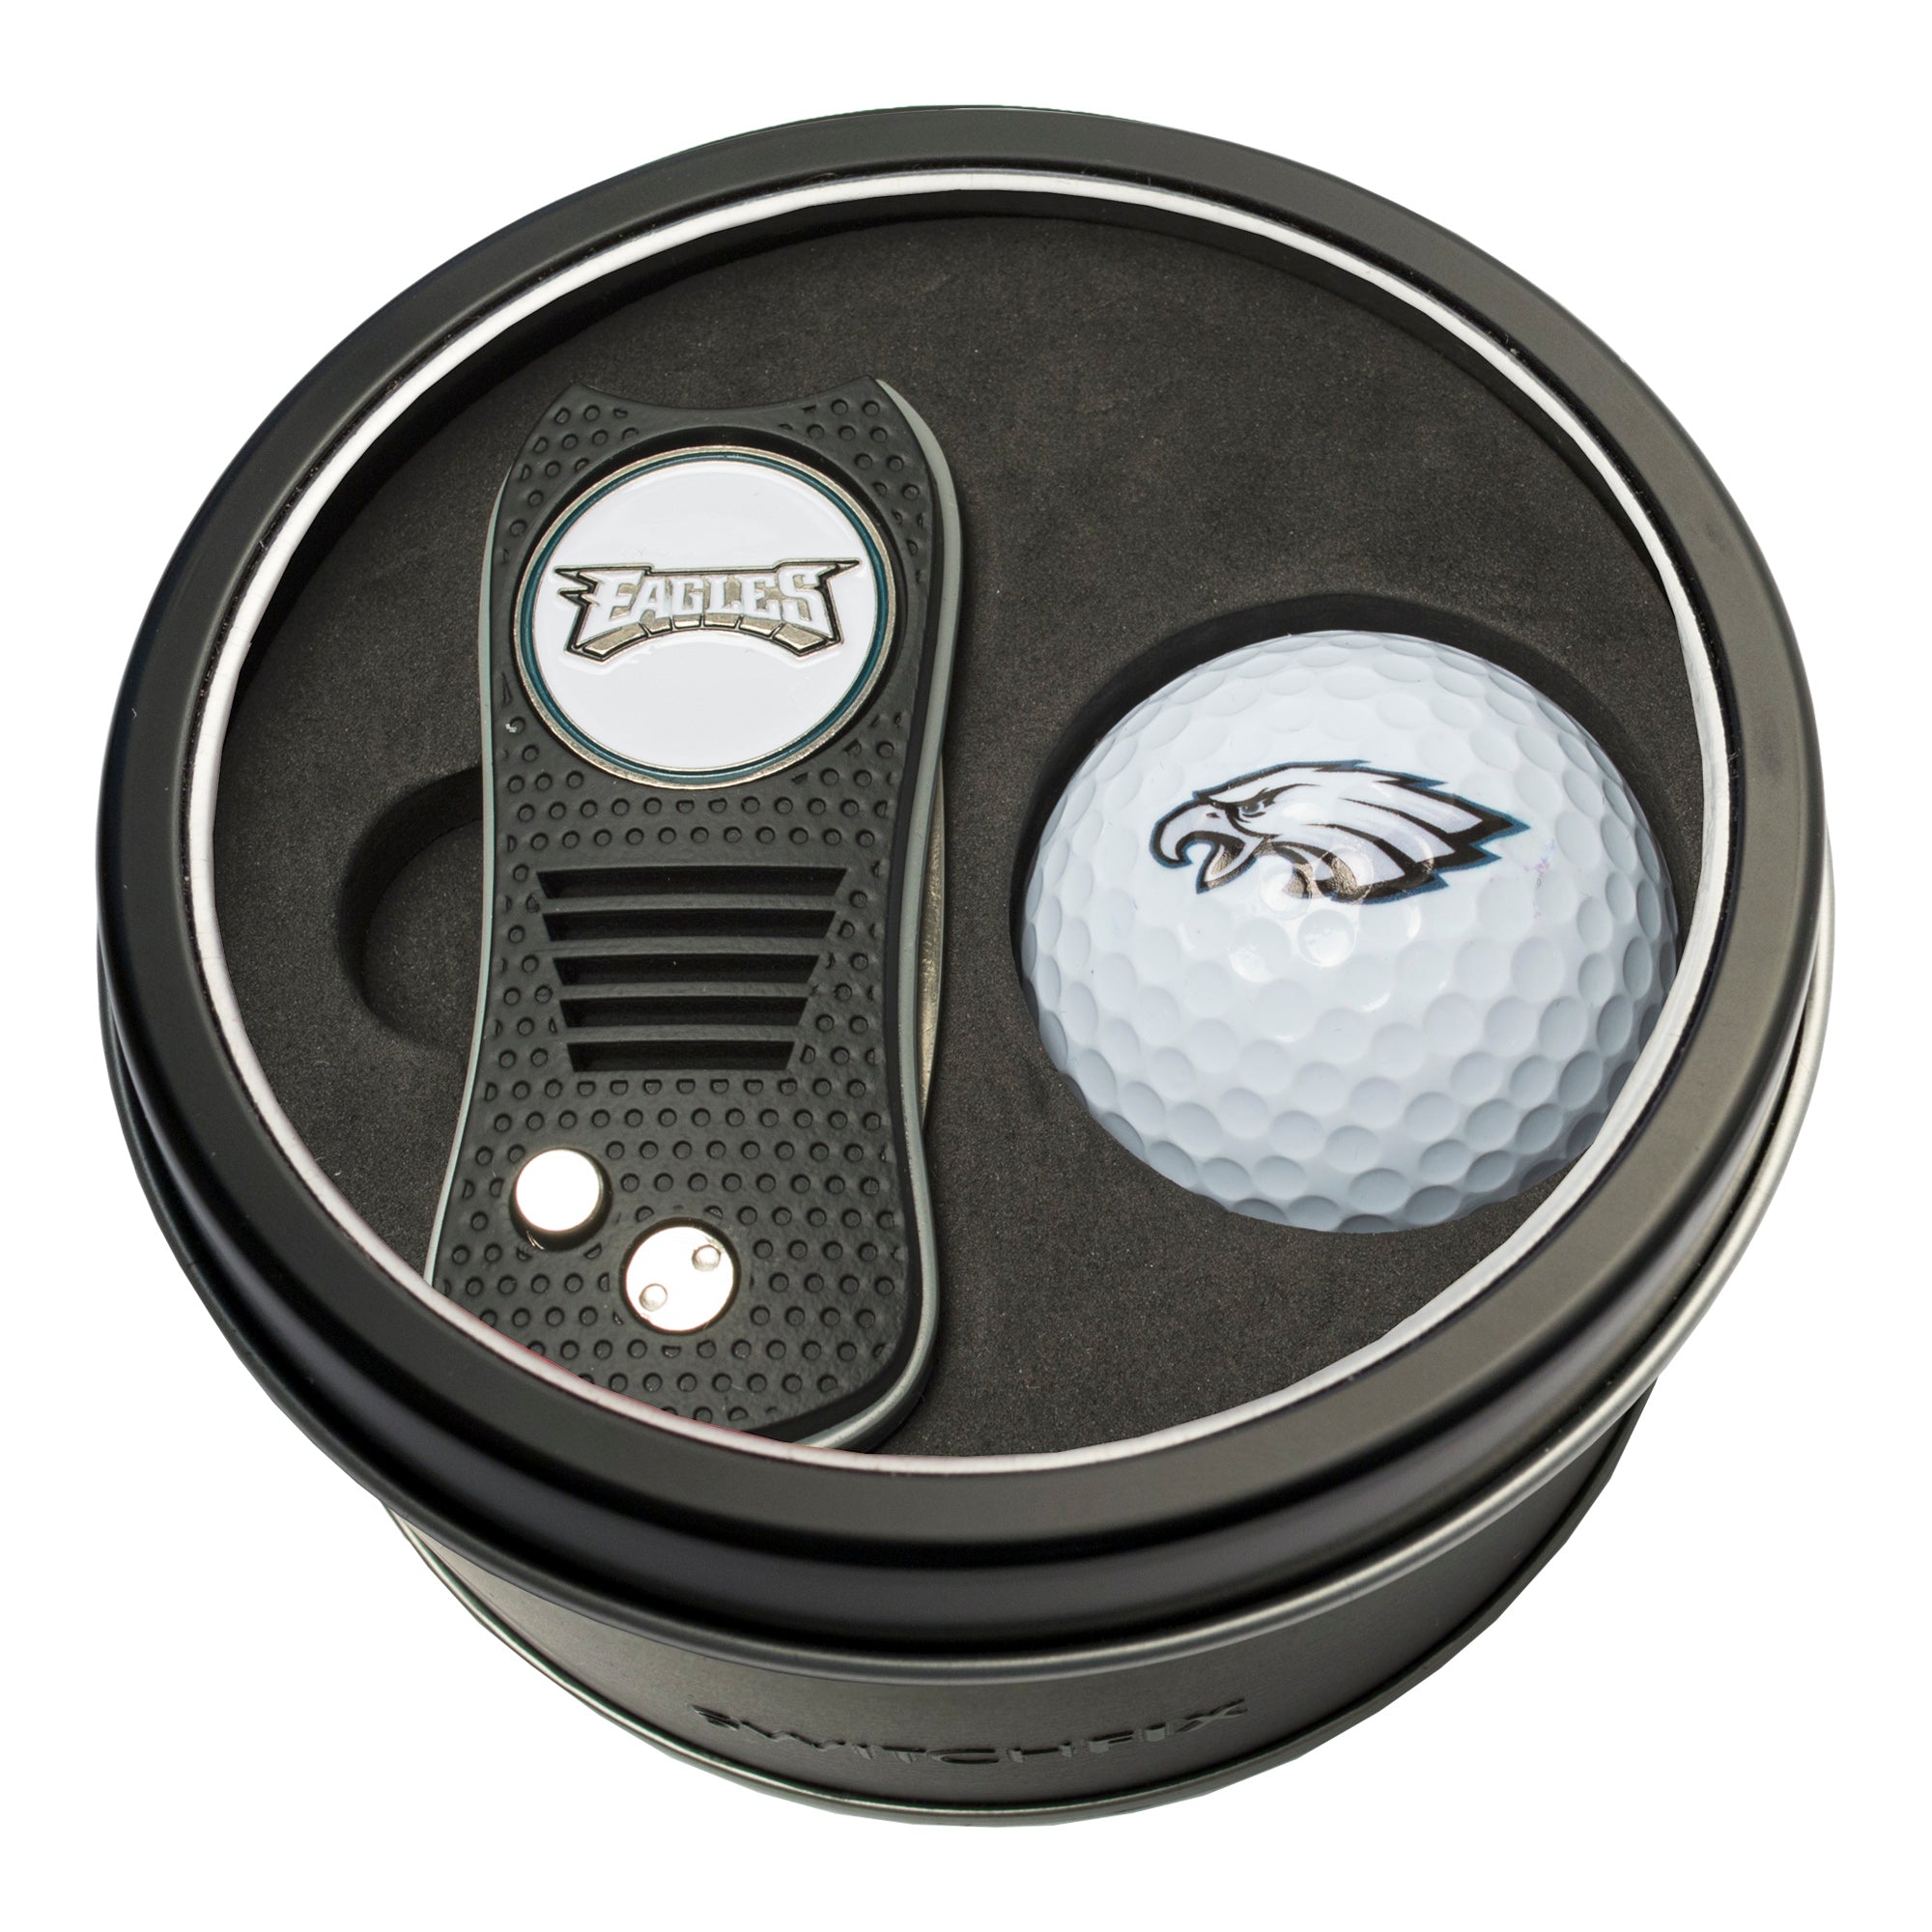 Philadelphia Eagles Switchblade Divot Tool + Golf Ball Tin Gift Set